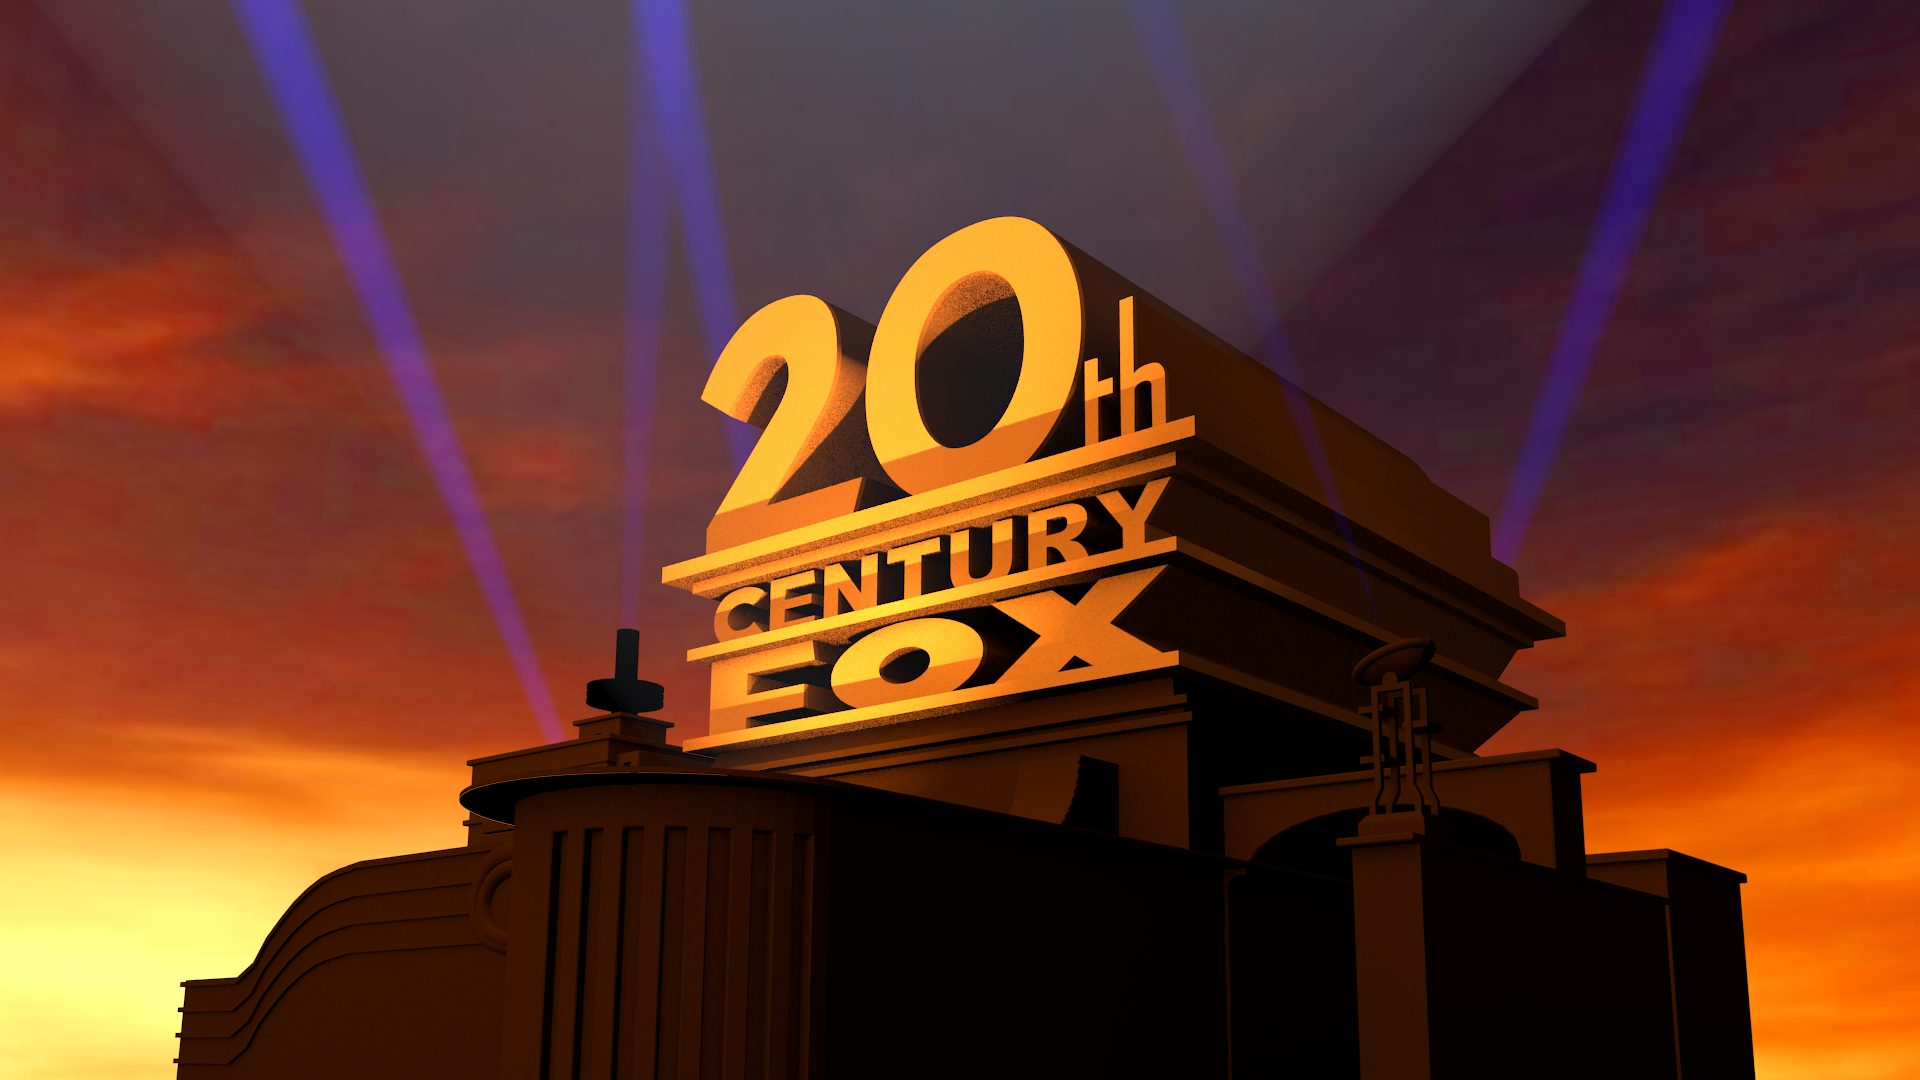 20 Век Fox. Сенчури Фокс. 20tn Century Fox. Кинокомпания 20 век Фокс. Заставка fox